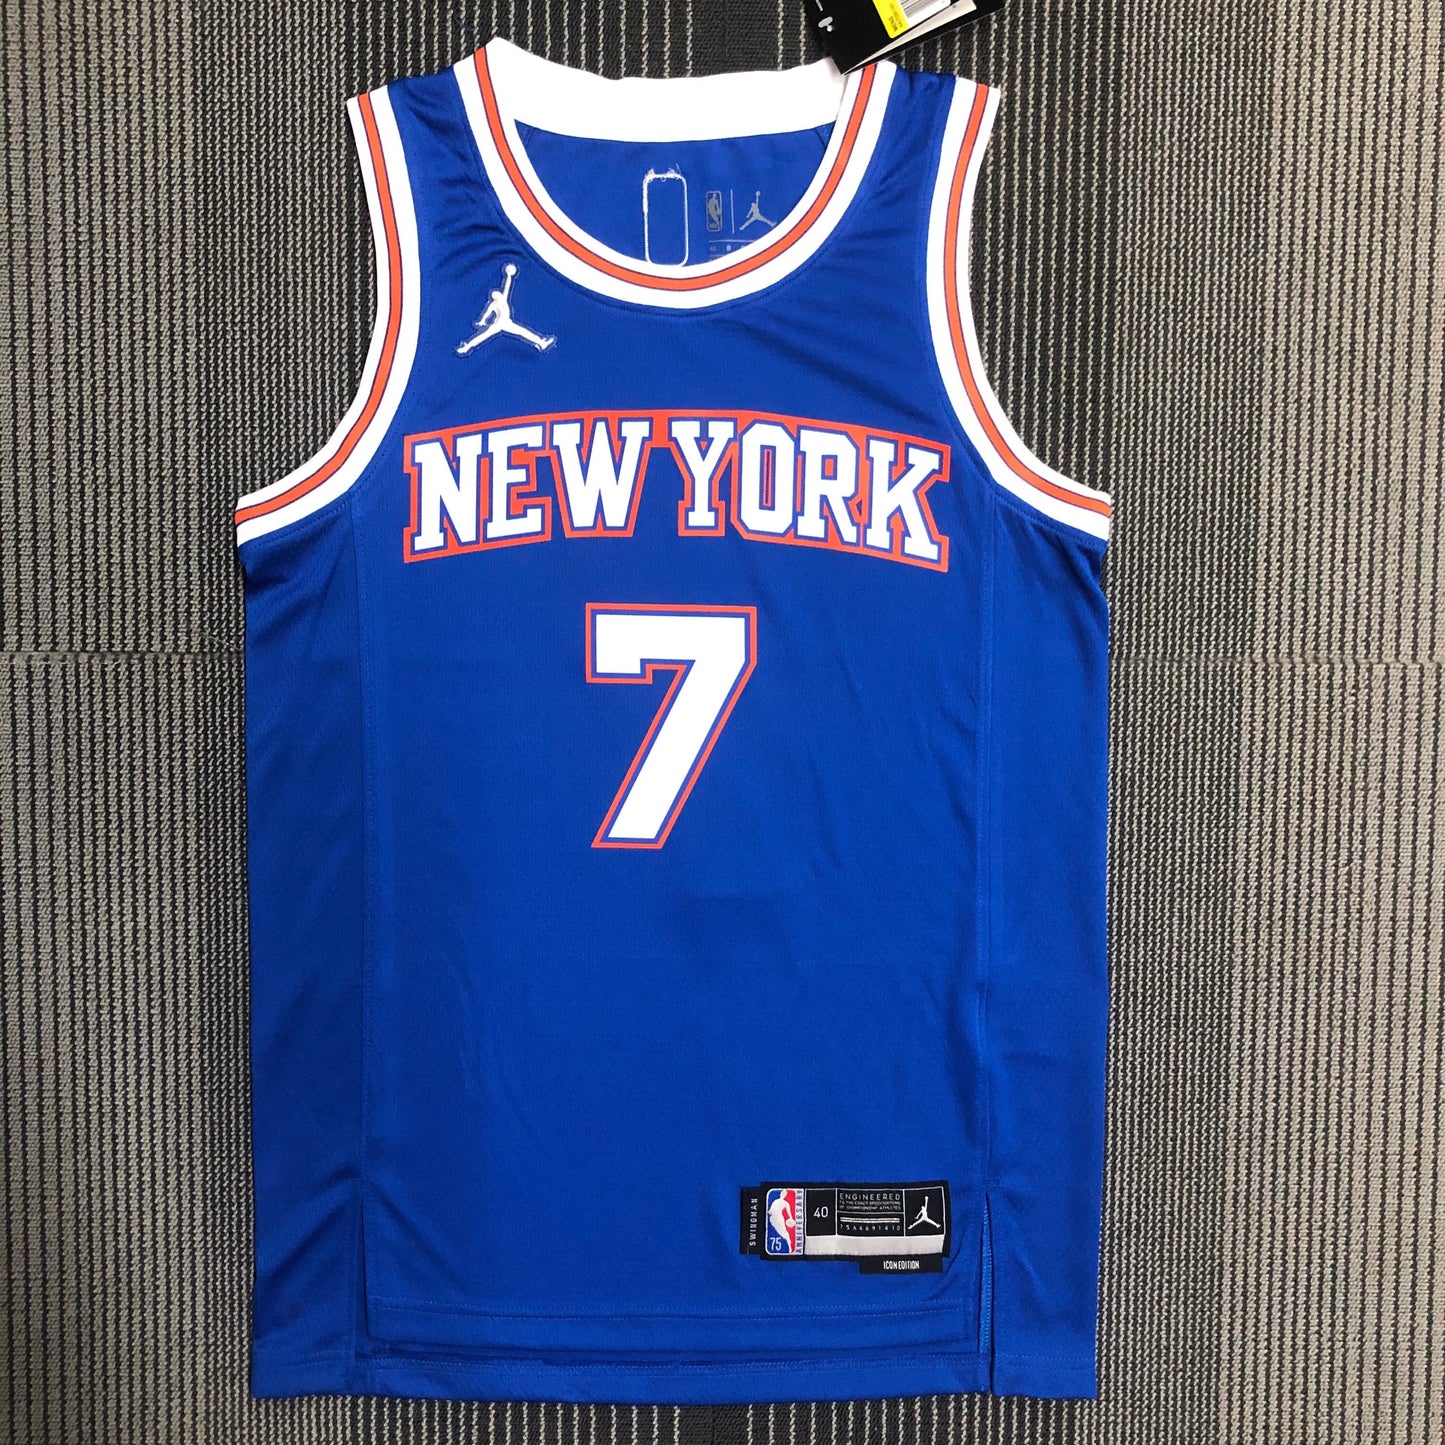 Carmelo Anthony New York Knicks 2020/21 Jordan Brand NBA Swingman Jersey - Statement Edition